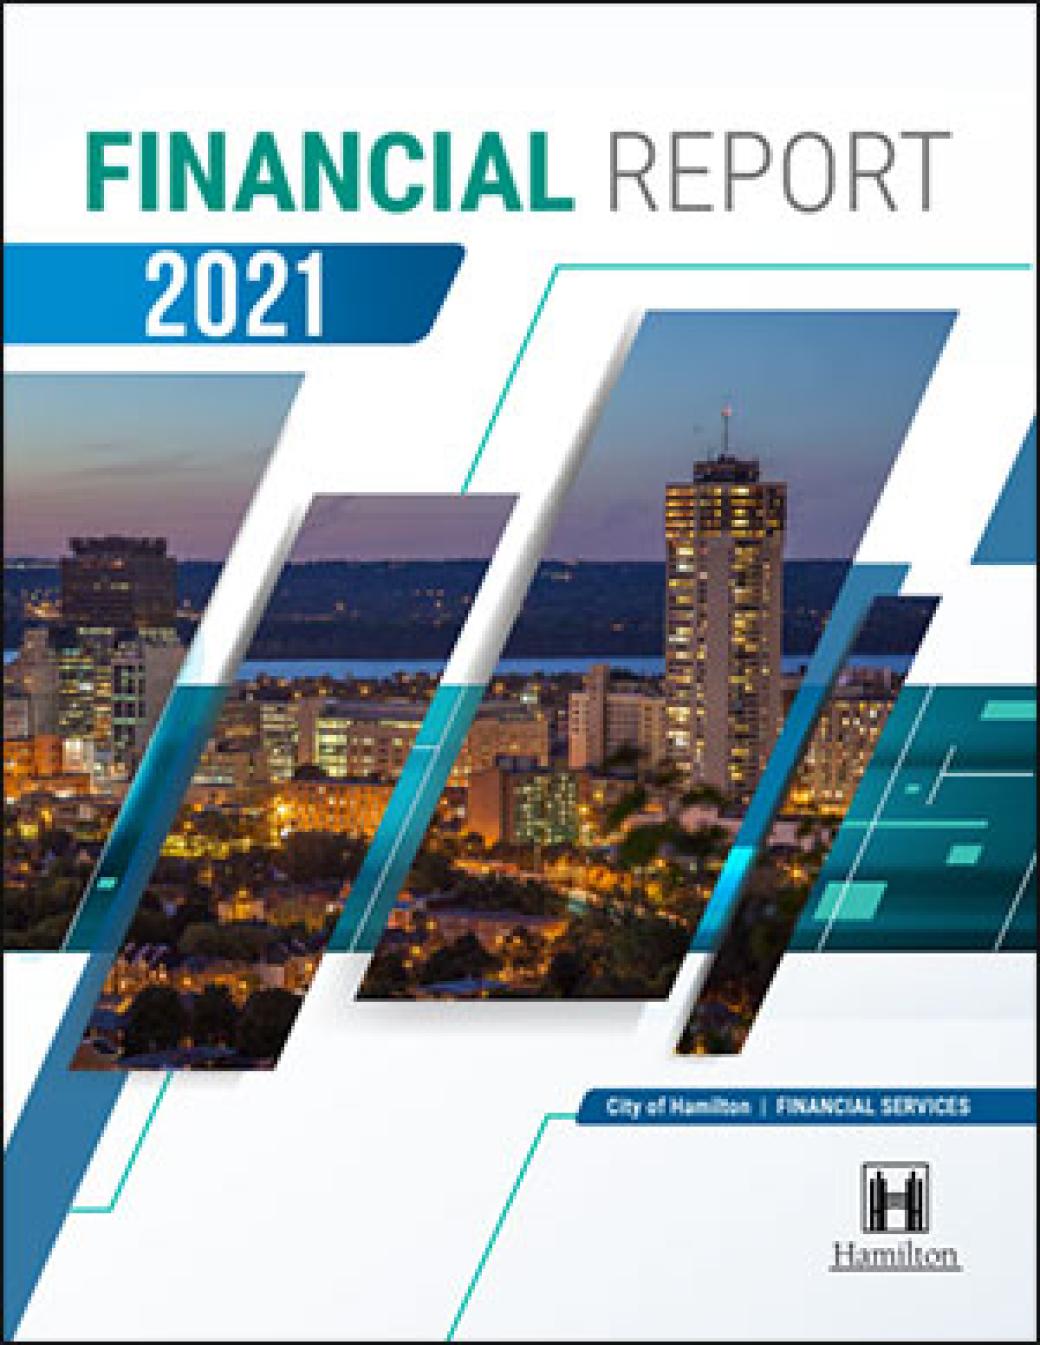 Financial Report 2021 - city of Hamilton skyline at night